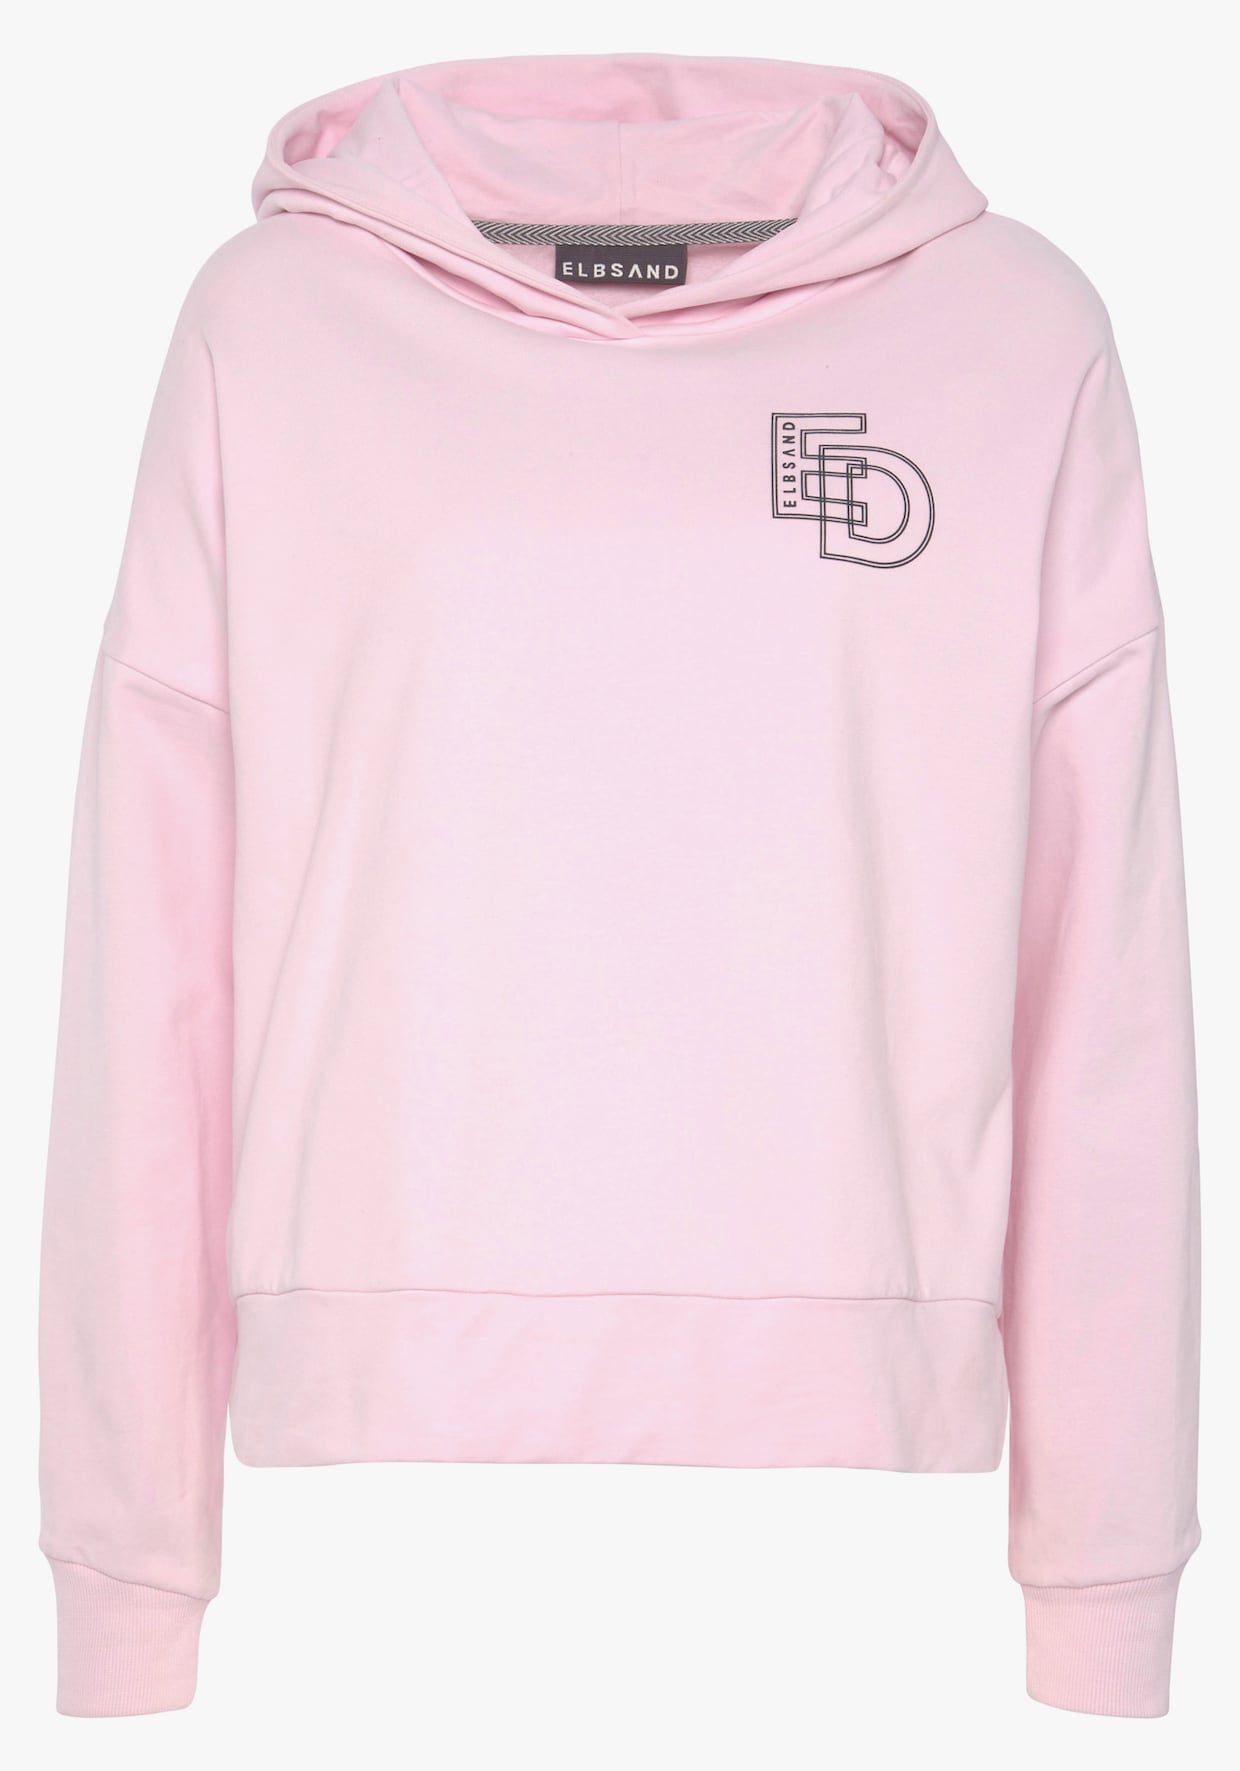 Elbsand Sweatshirt à capuche - rose